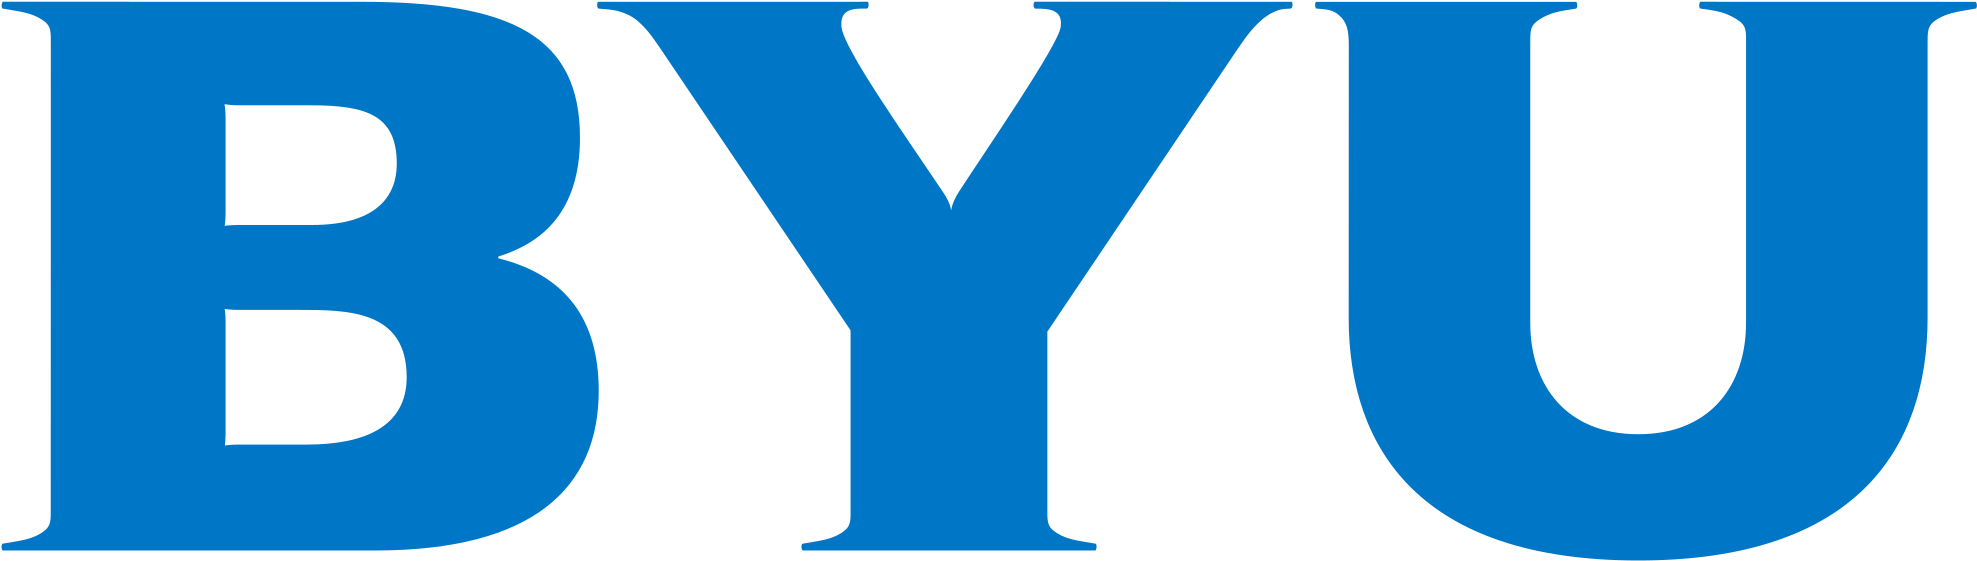 Brigham Young University - Byu Pathway Worldwide Logo (2000x625)